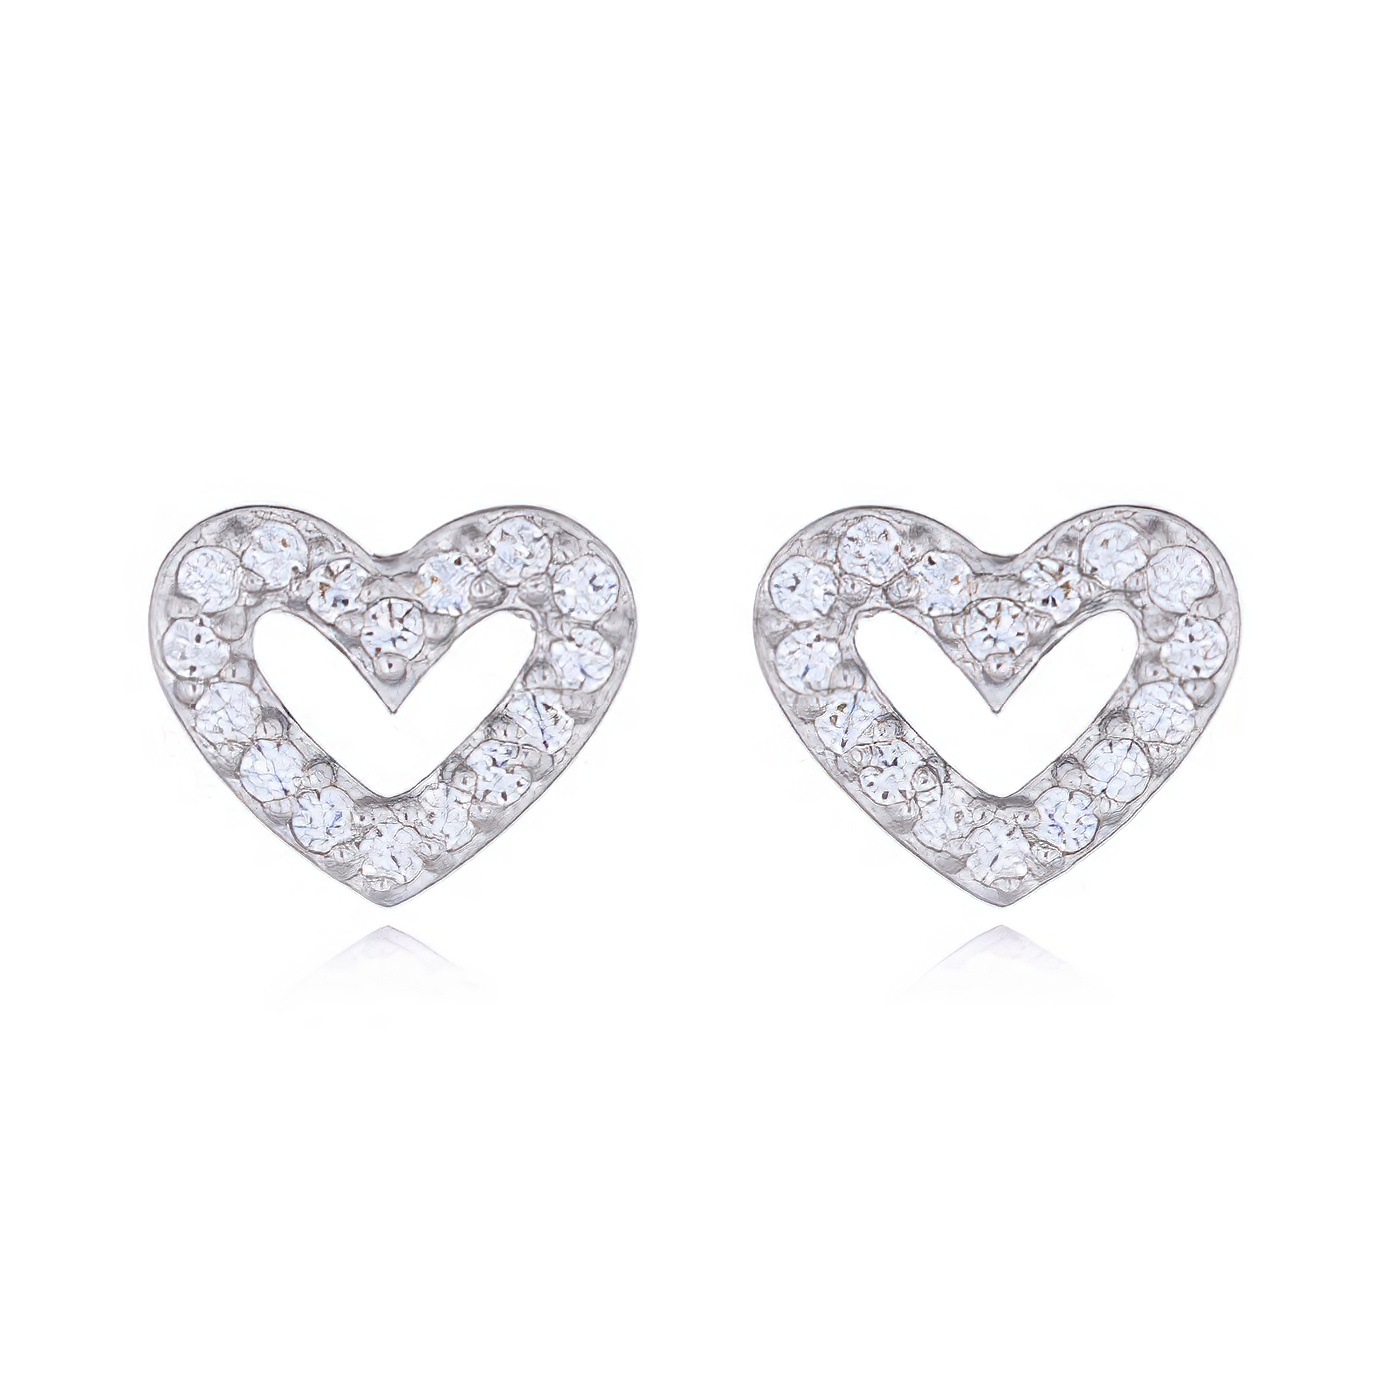 Cubic White Zirconia Heart Sterling Silver Stud Earrings by BeYindi 